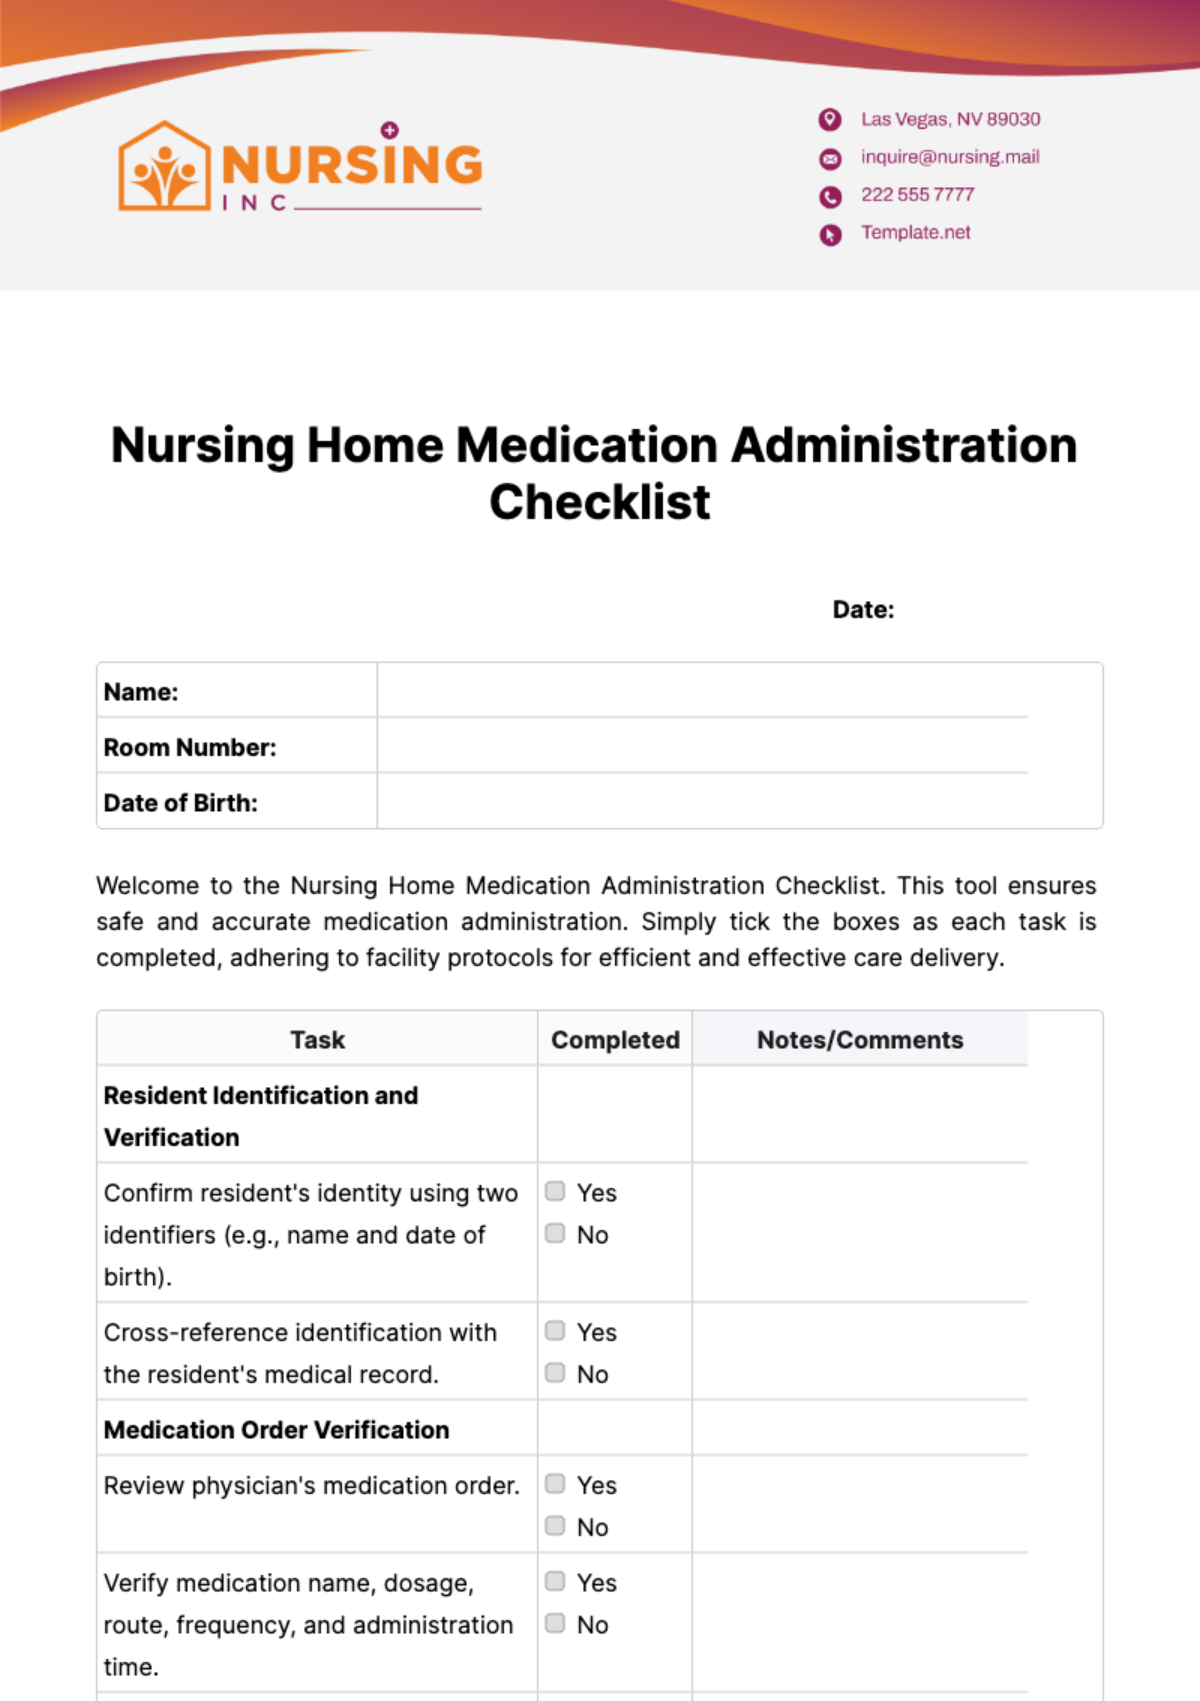 Nursing Home Medication Administration Checklist Template